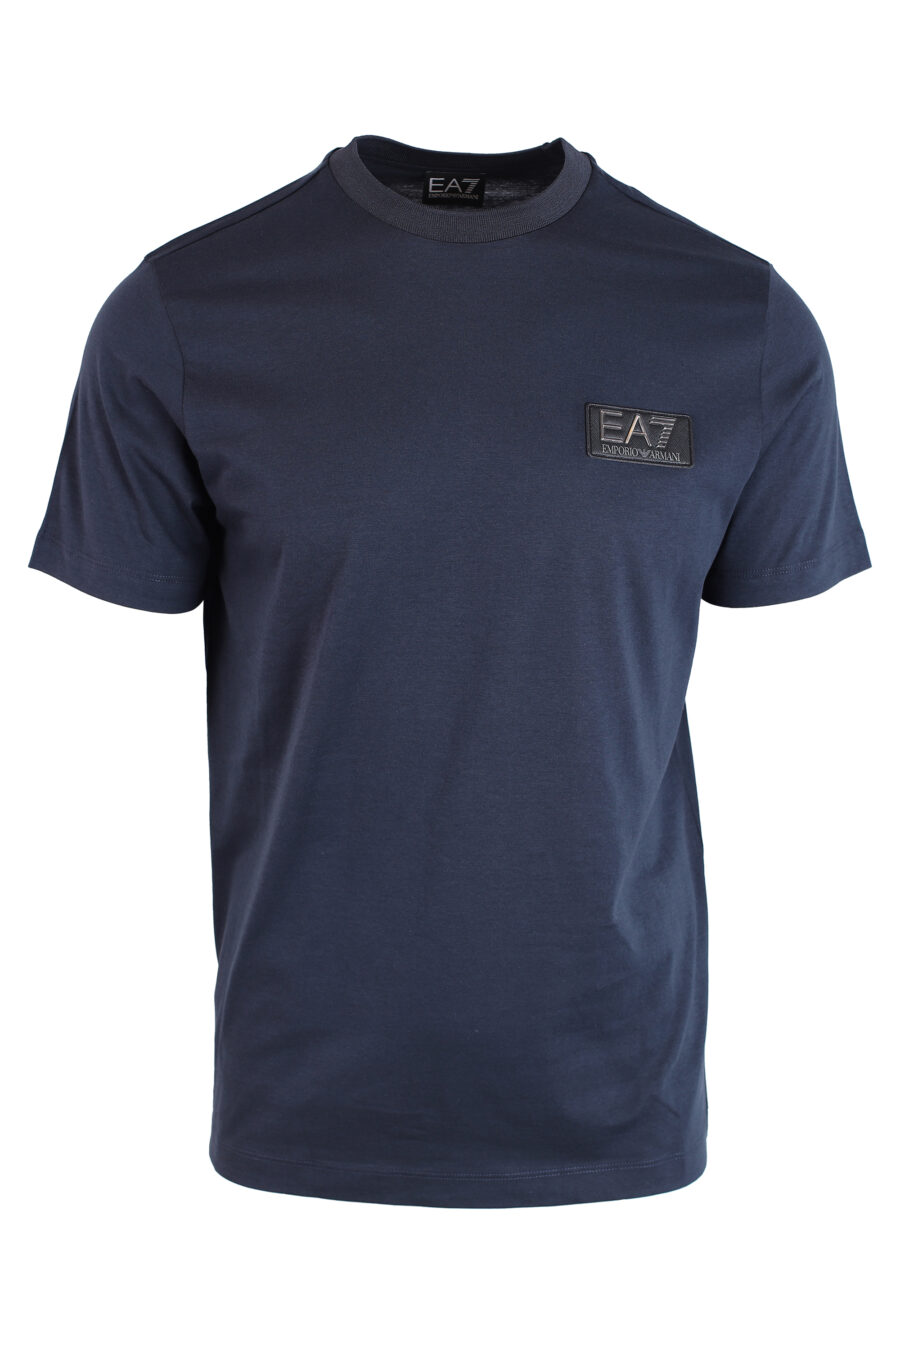 Dunkelblaues T-Shirt mit Mini-Logo in goldenem Aufnäher - IMG 3230